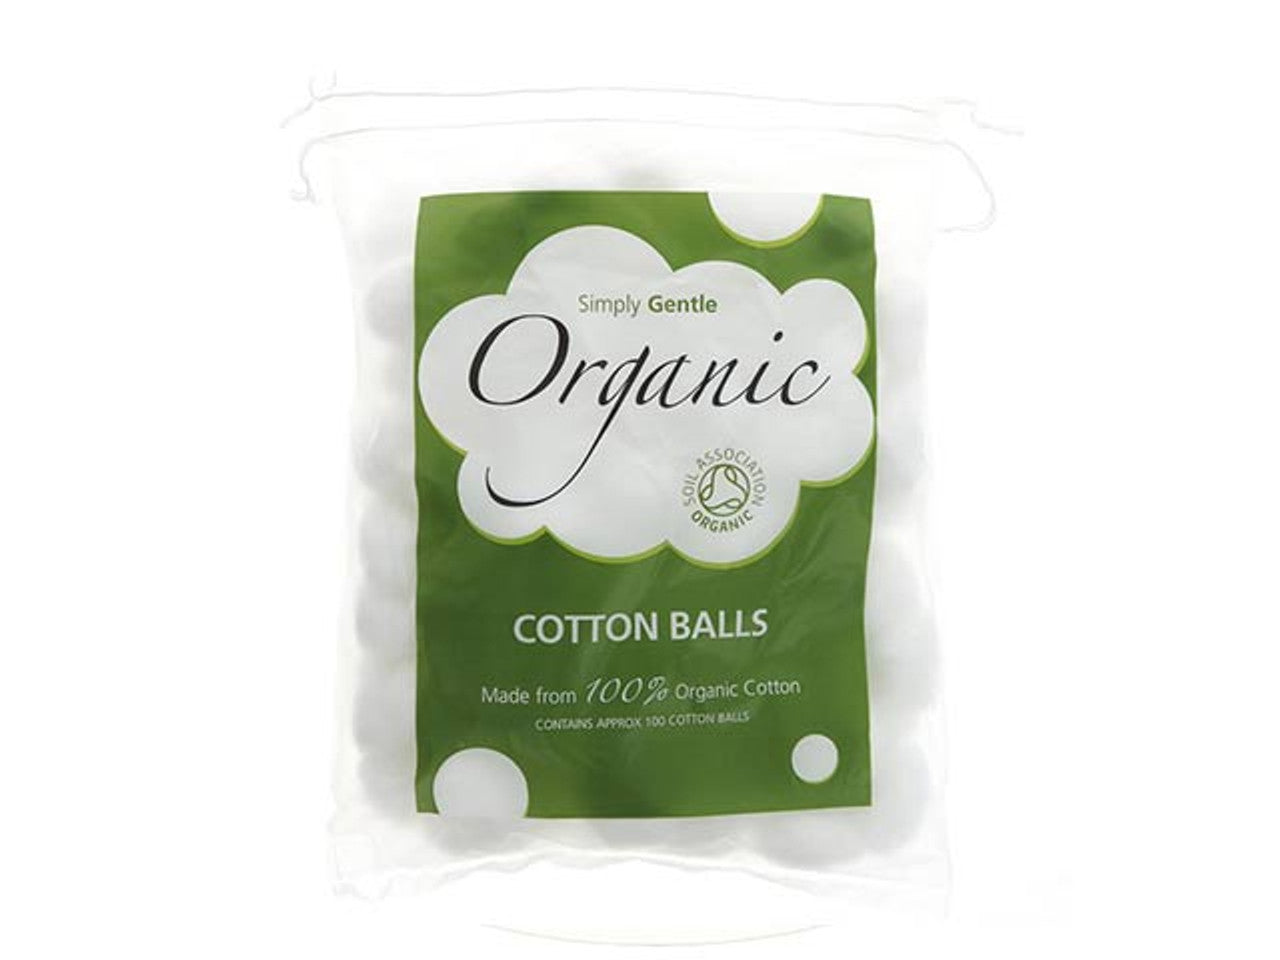 Cotton Wool Balls 13828A